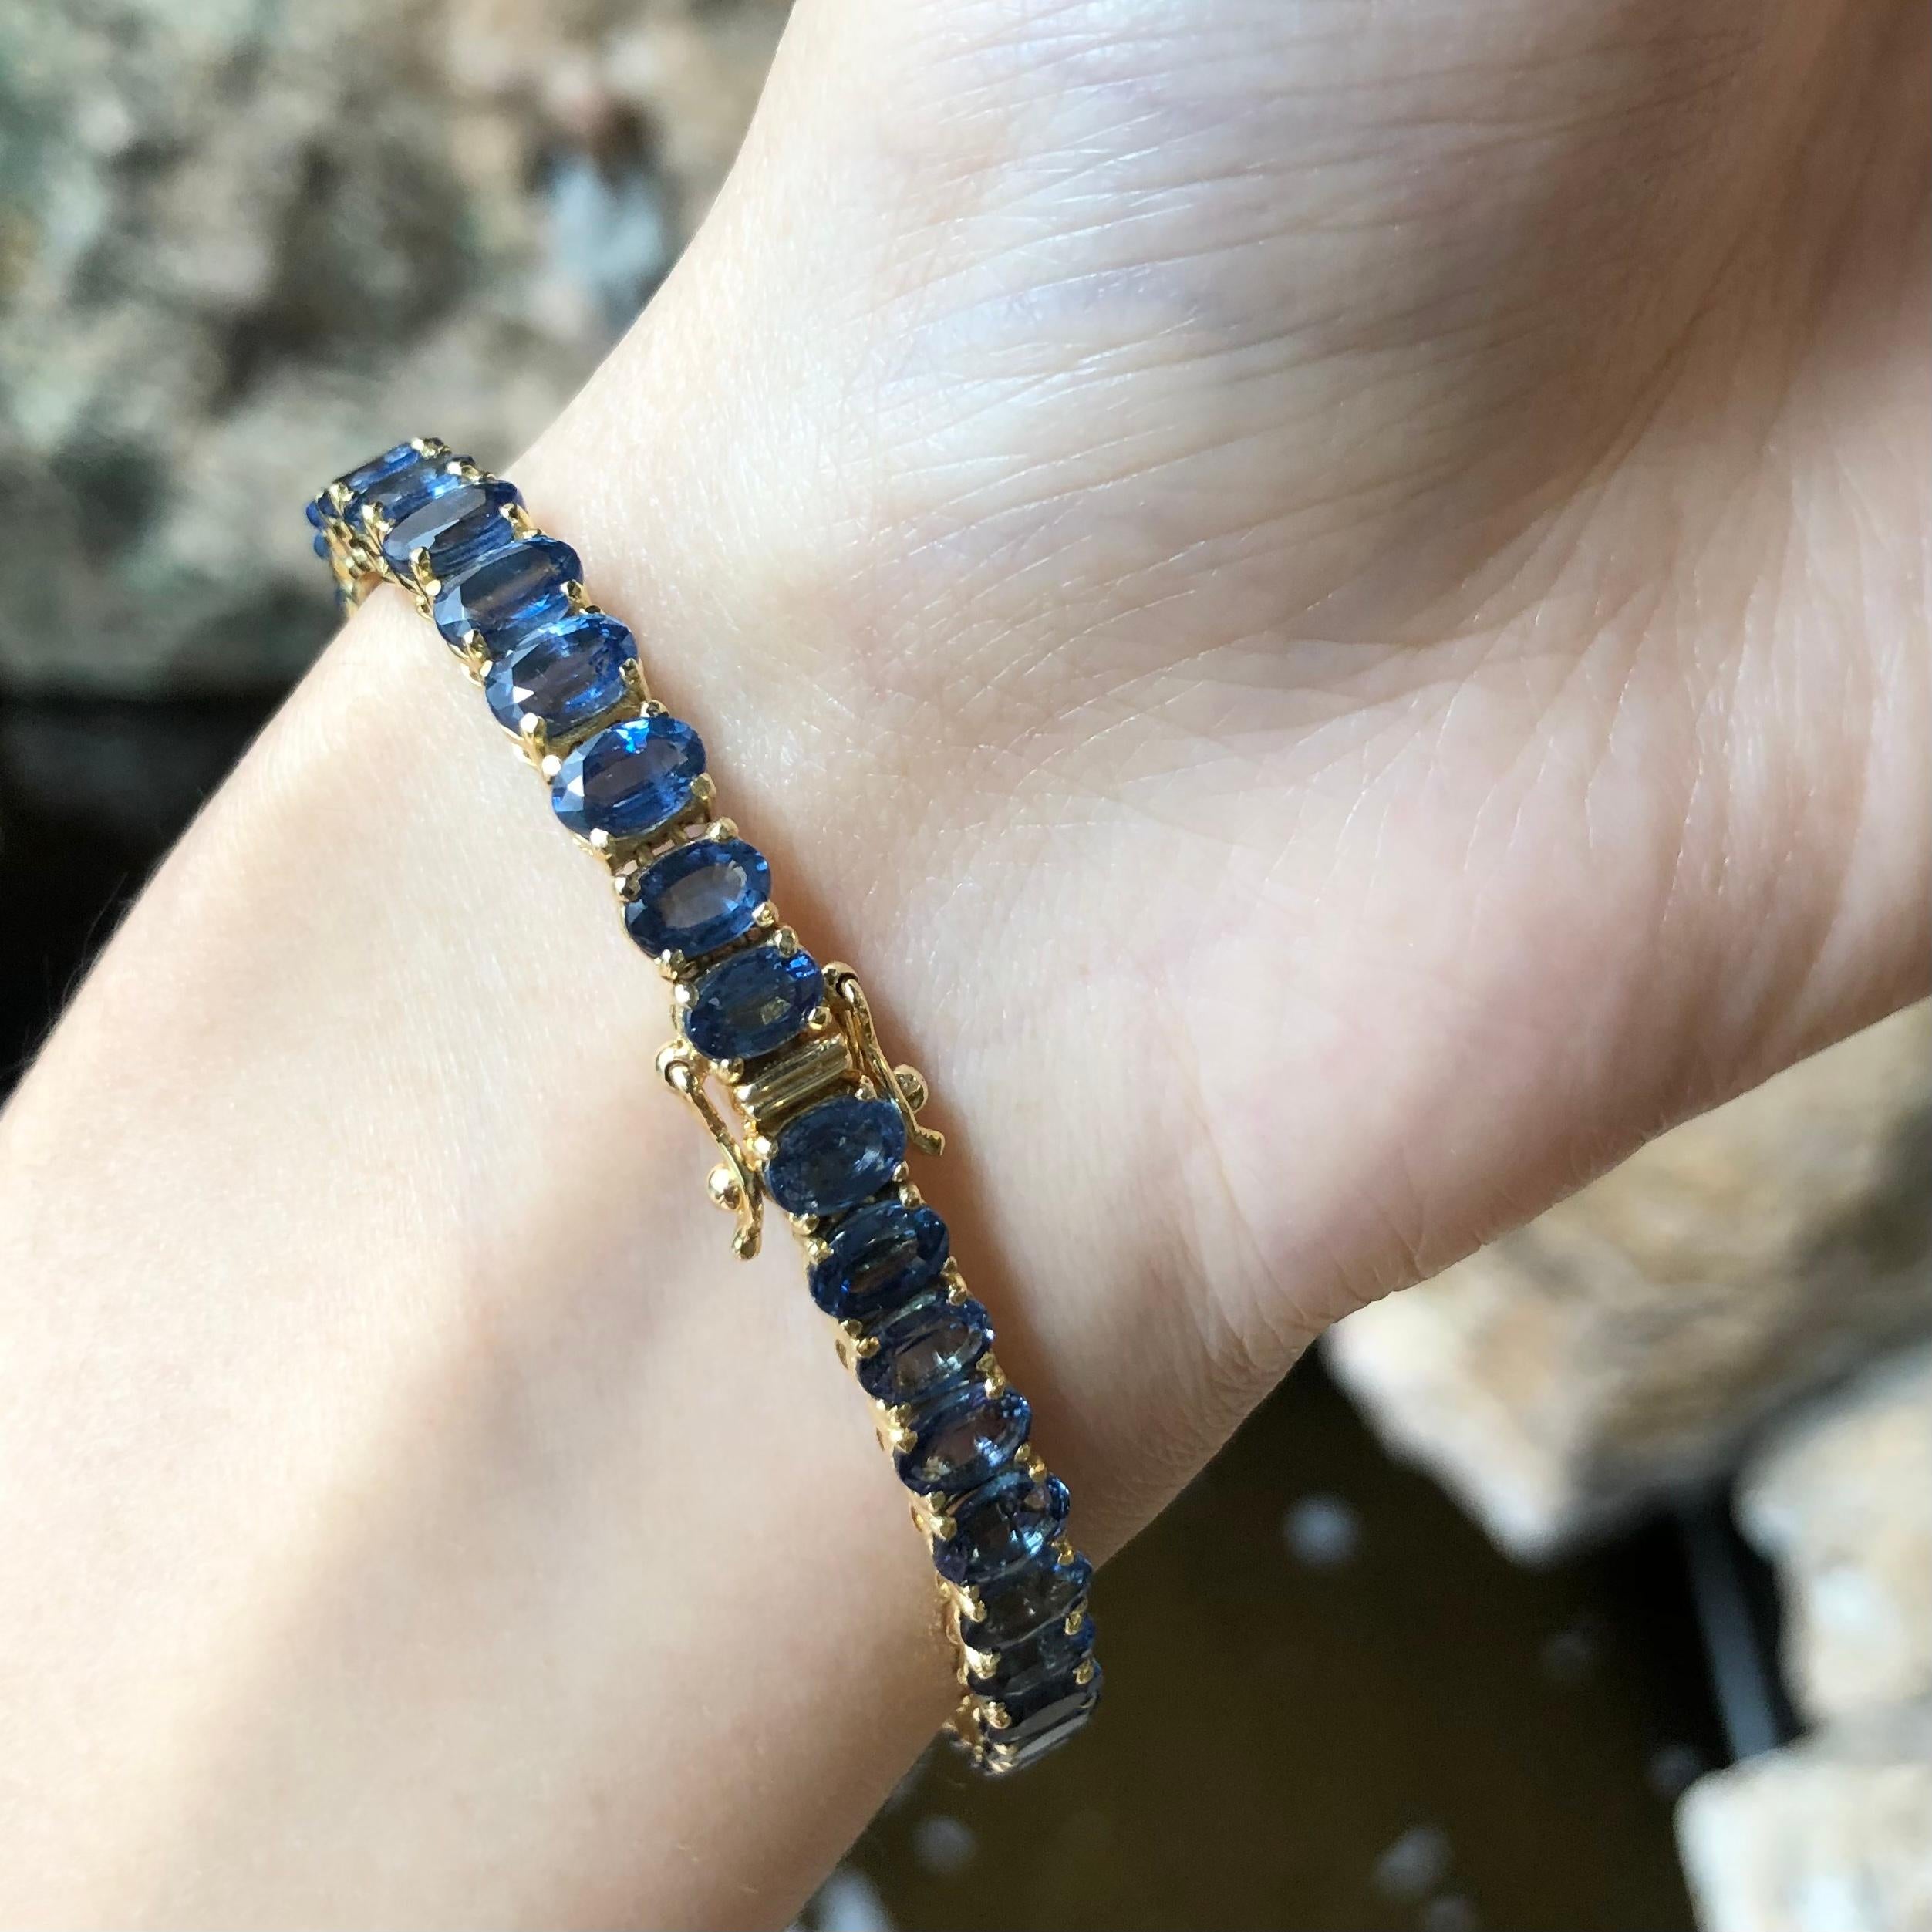 Blue Sapphire 23.37 carats Bracelet set in 14 Karat Gold Settings

Width:  0.6 cm 
Length: 17.5 cm
Total Weight: 21.05 grams

